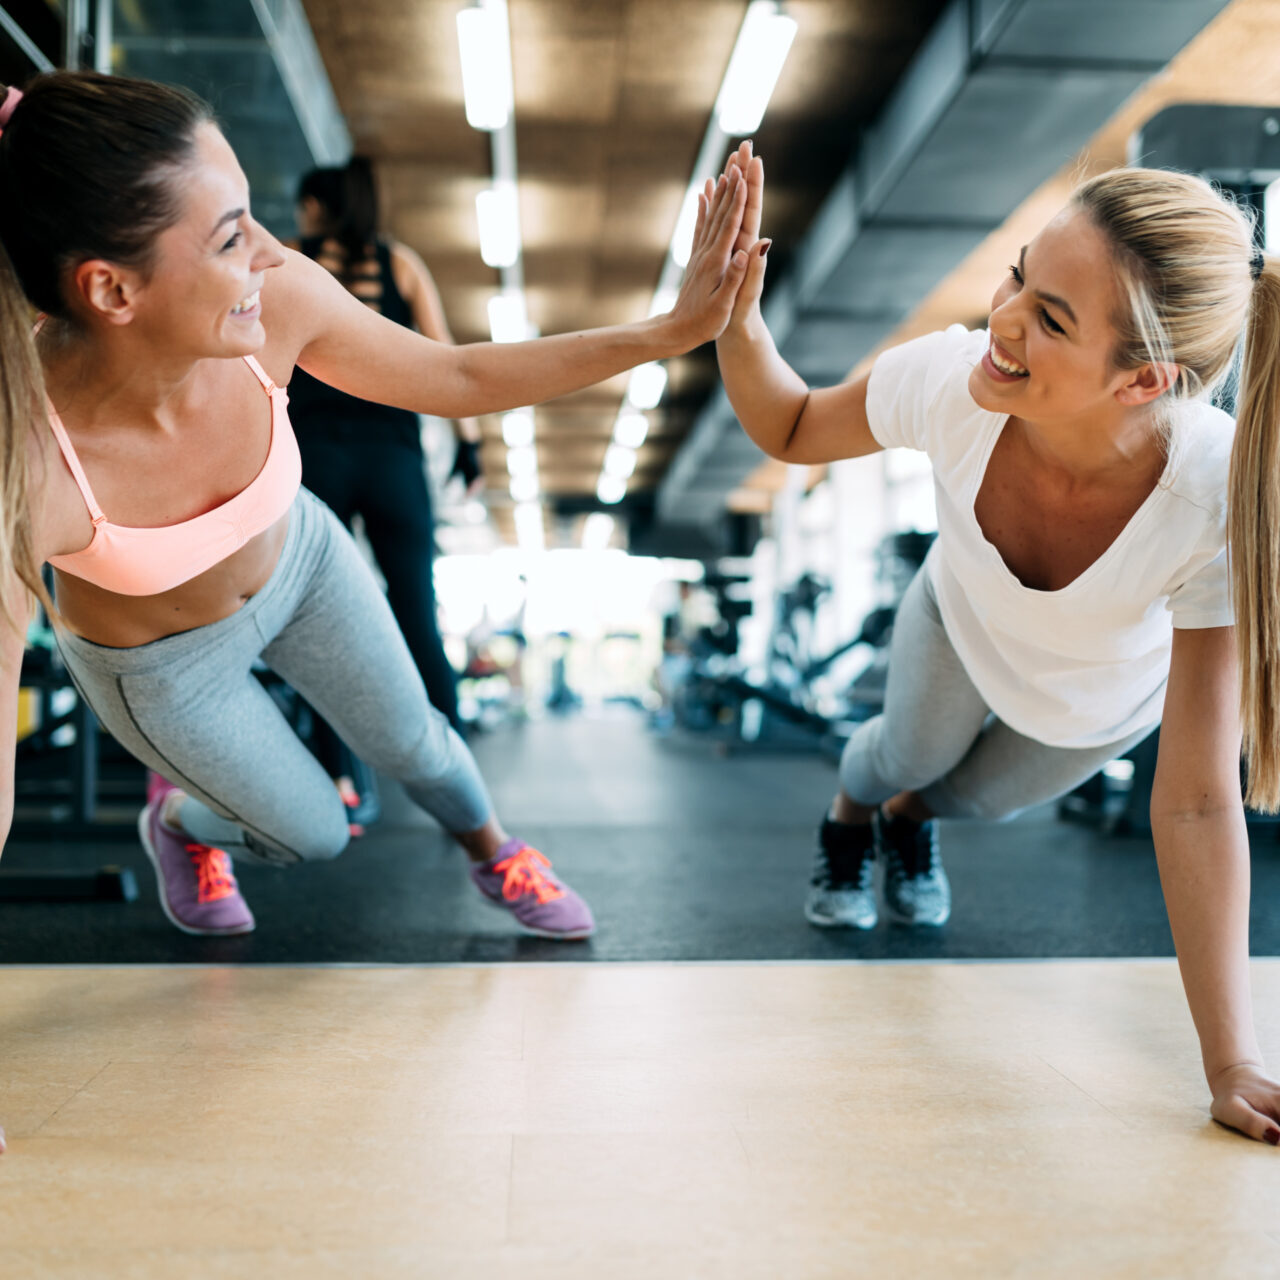 Women high five, fitness, gym, workout, weight